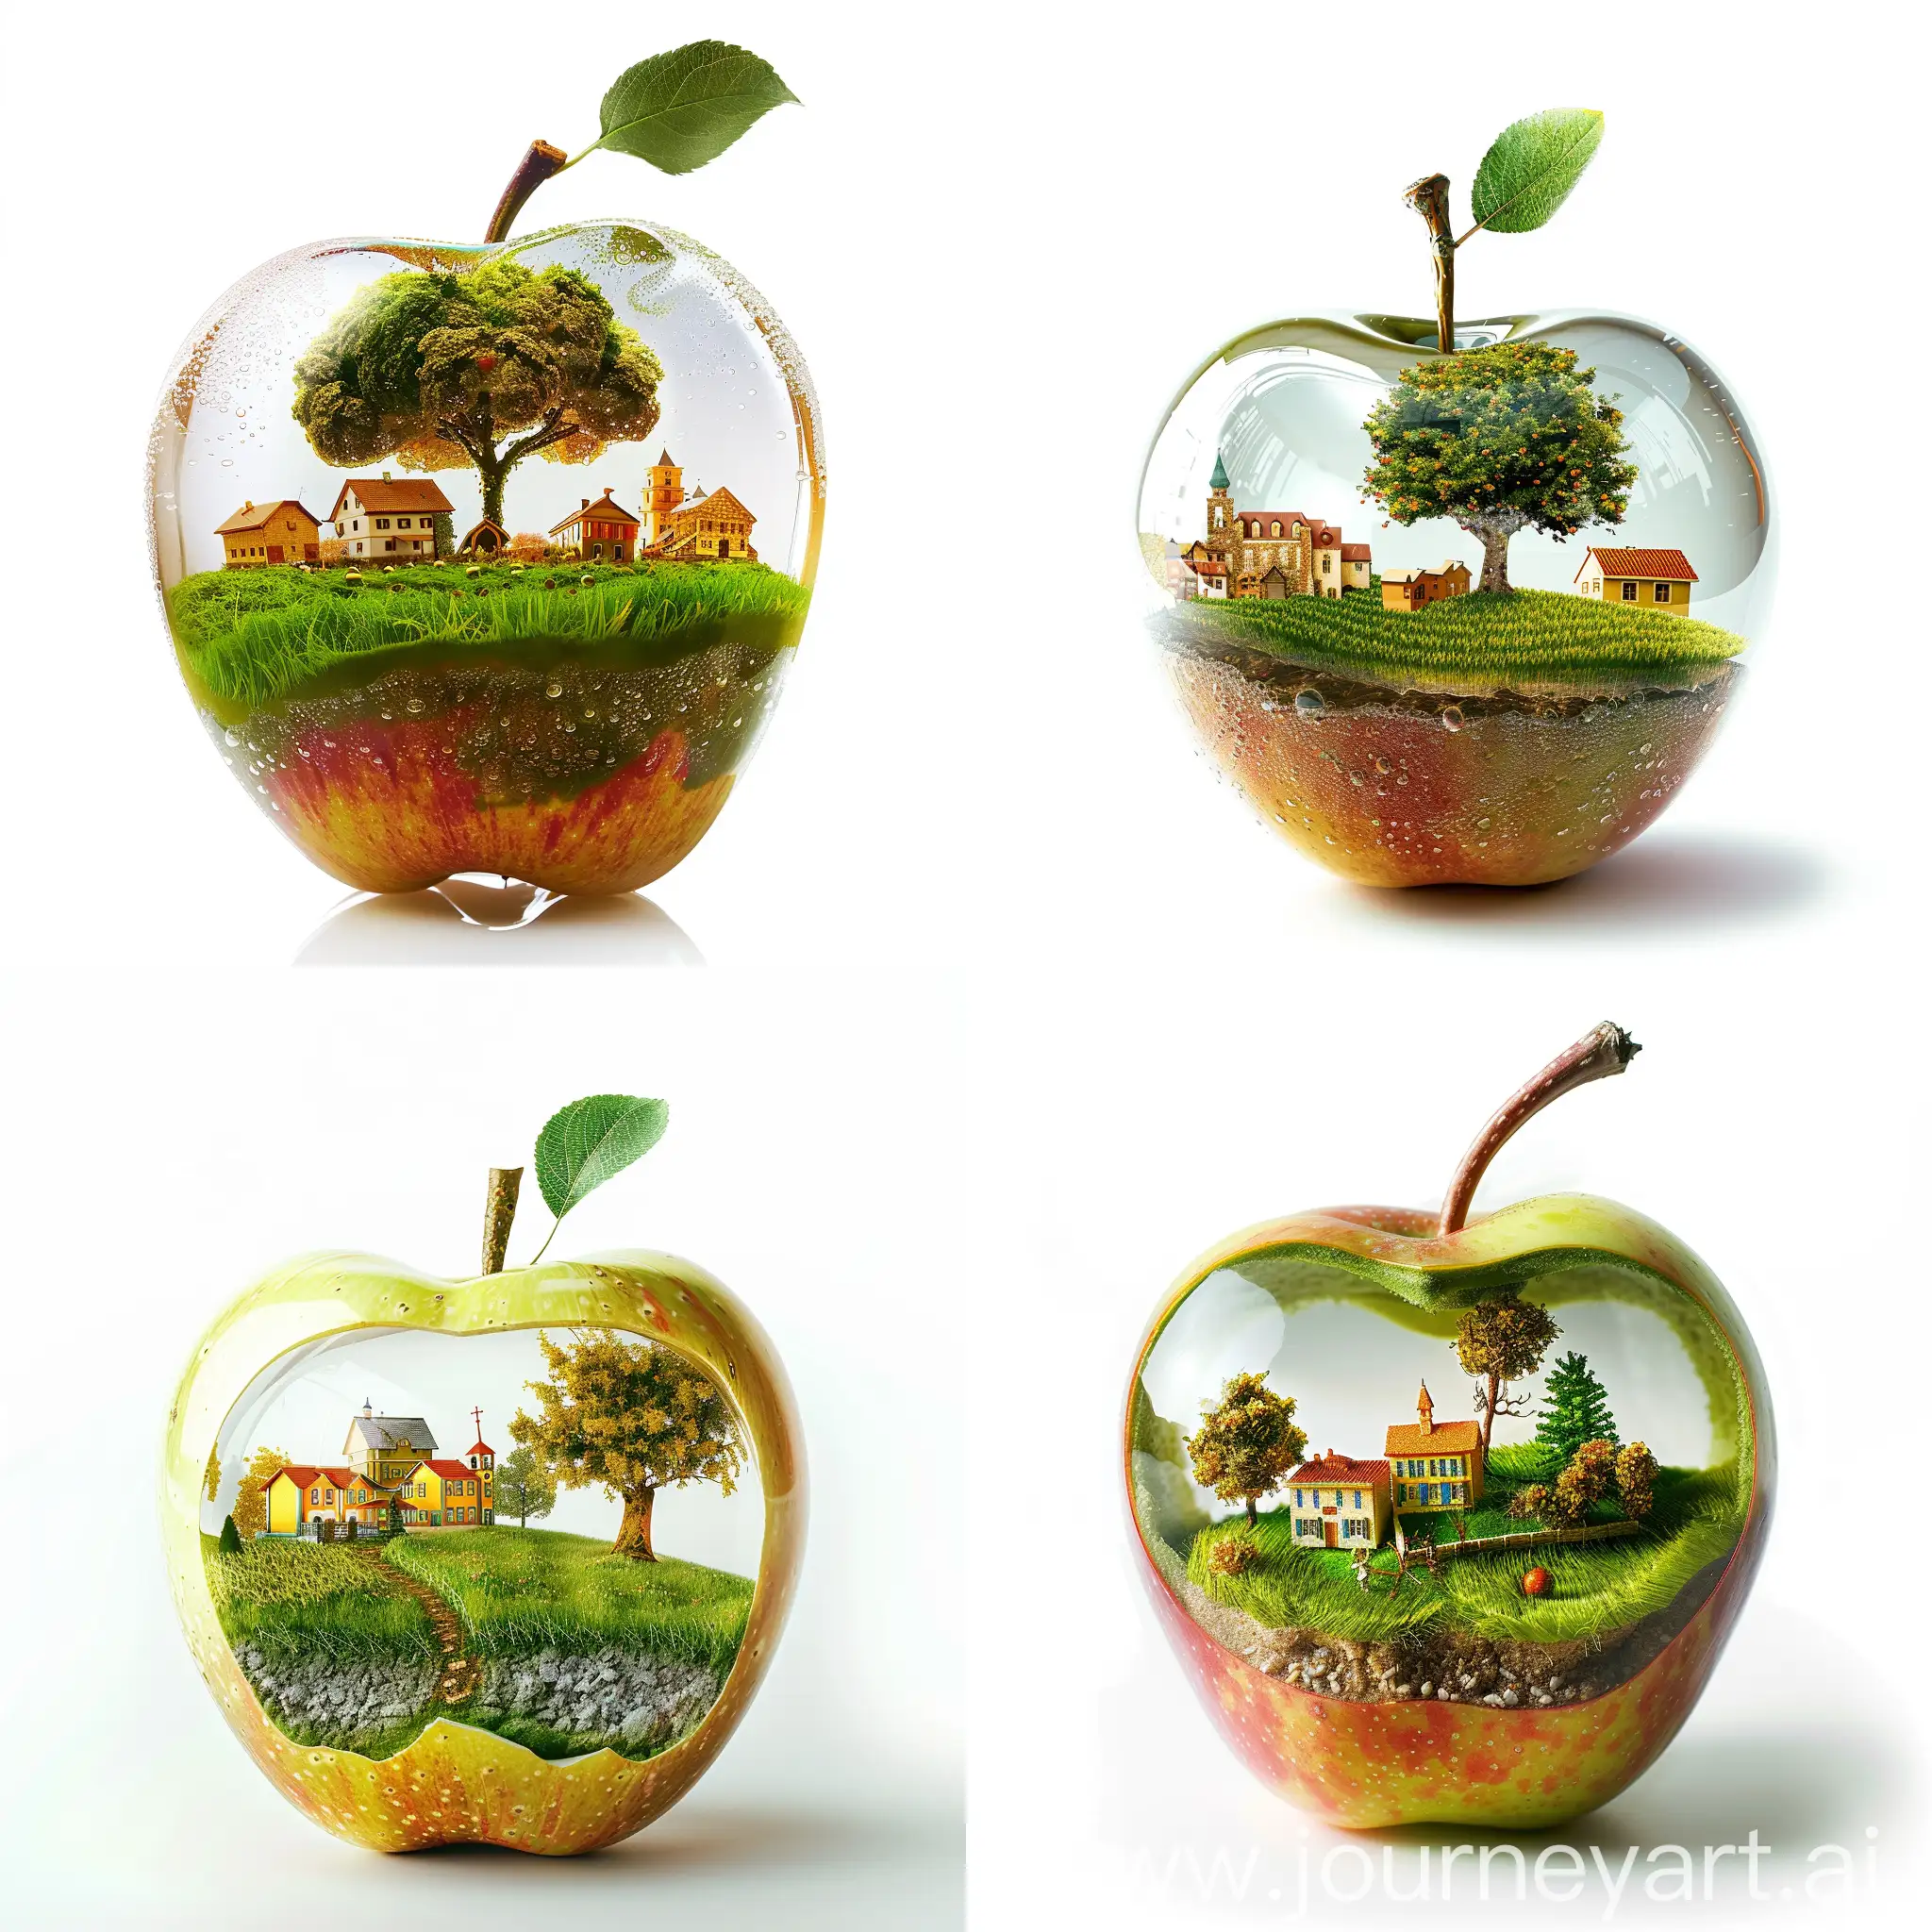 Transparent-Apple-with-Village-Scene-Inside-Held-Against-White-Background